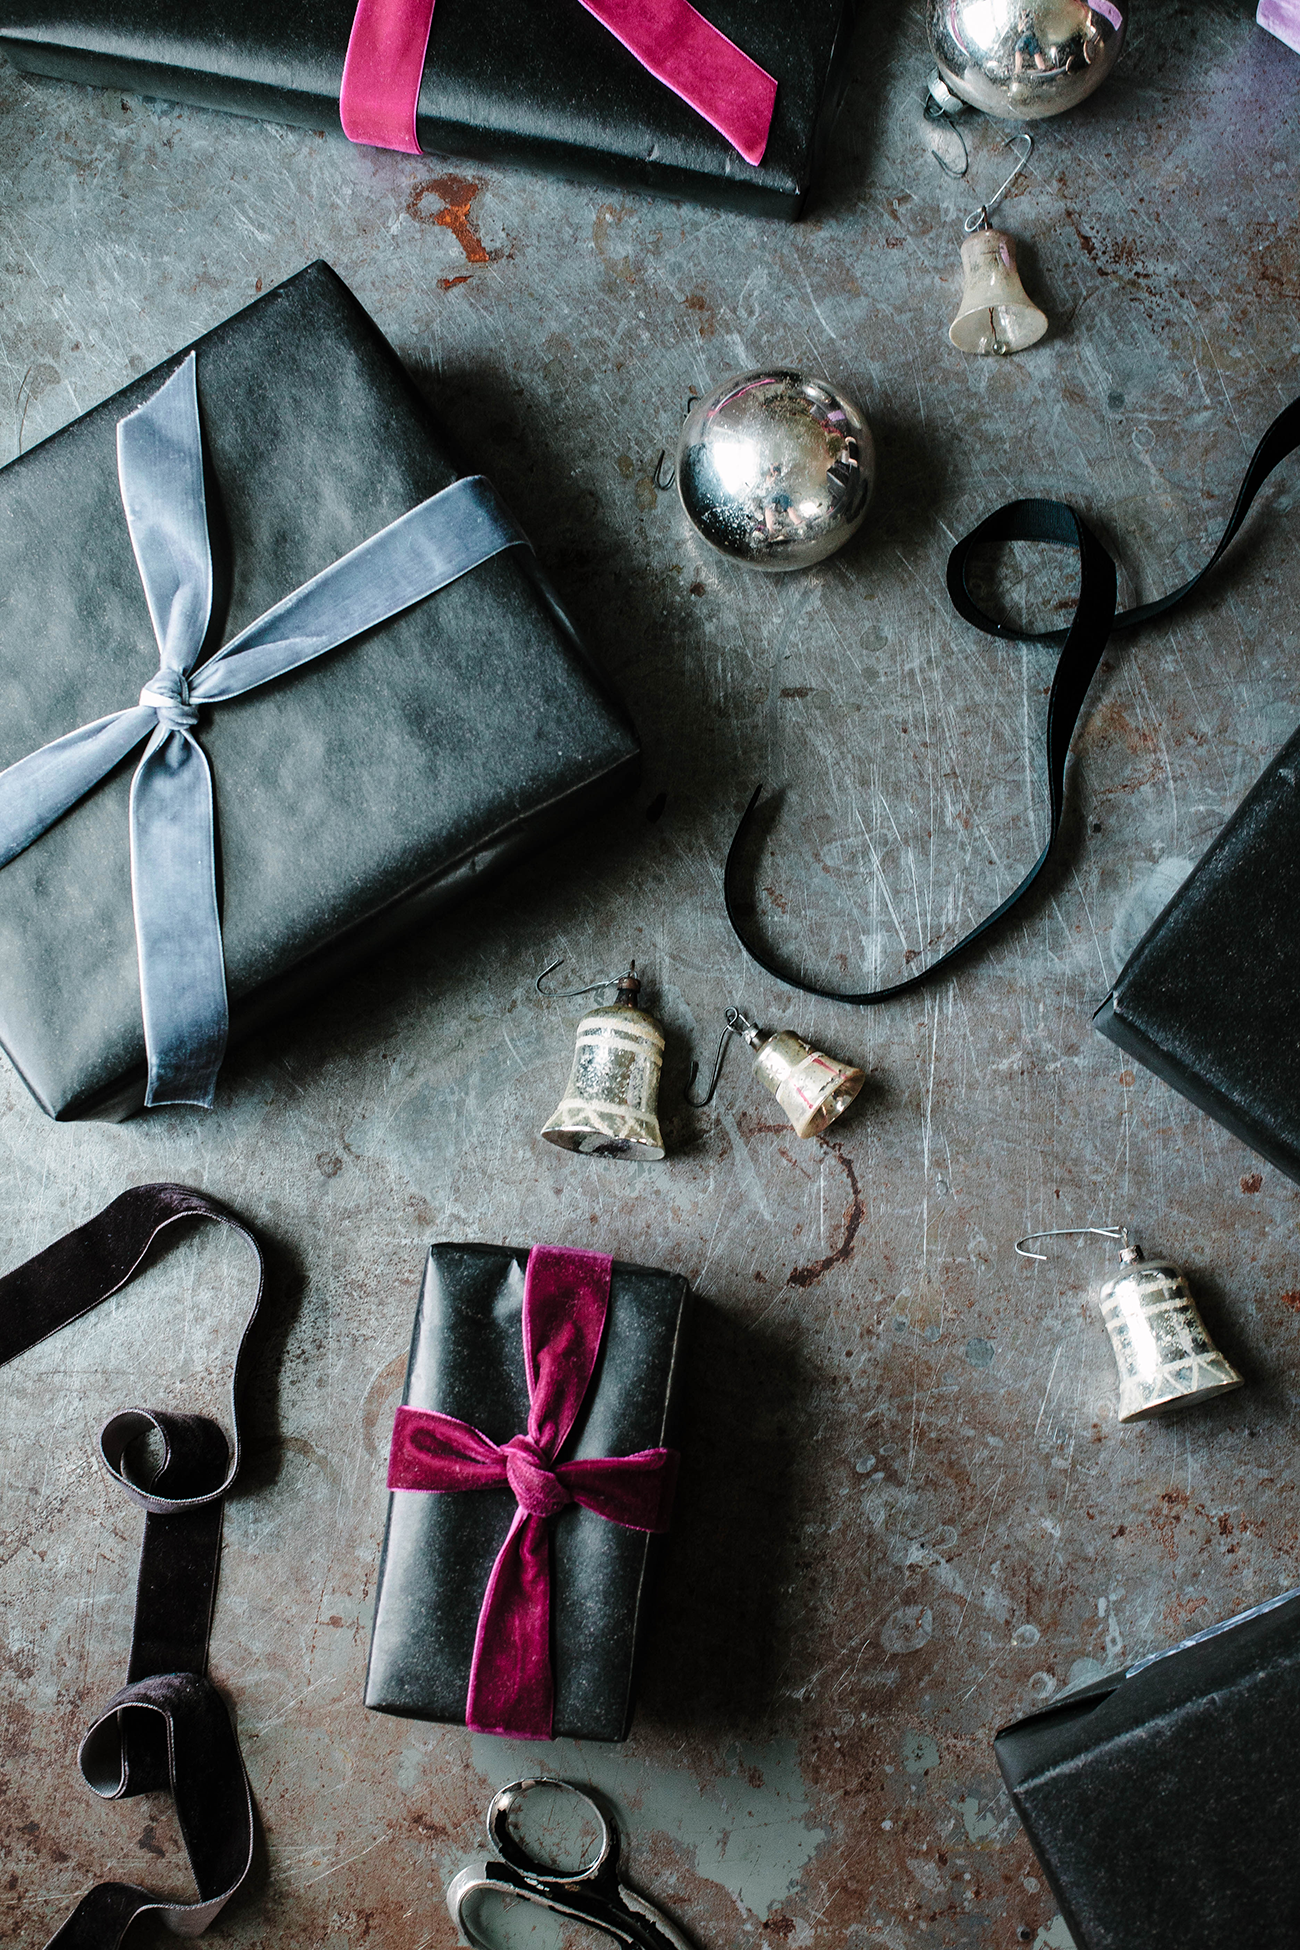 Christmas Wrapping Paper, Christmas Gift Wrap, Minimalist, Black